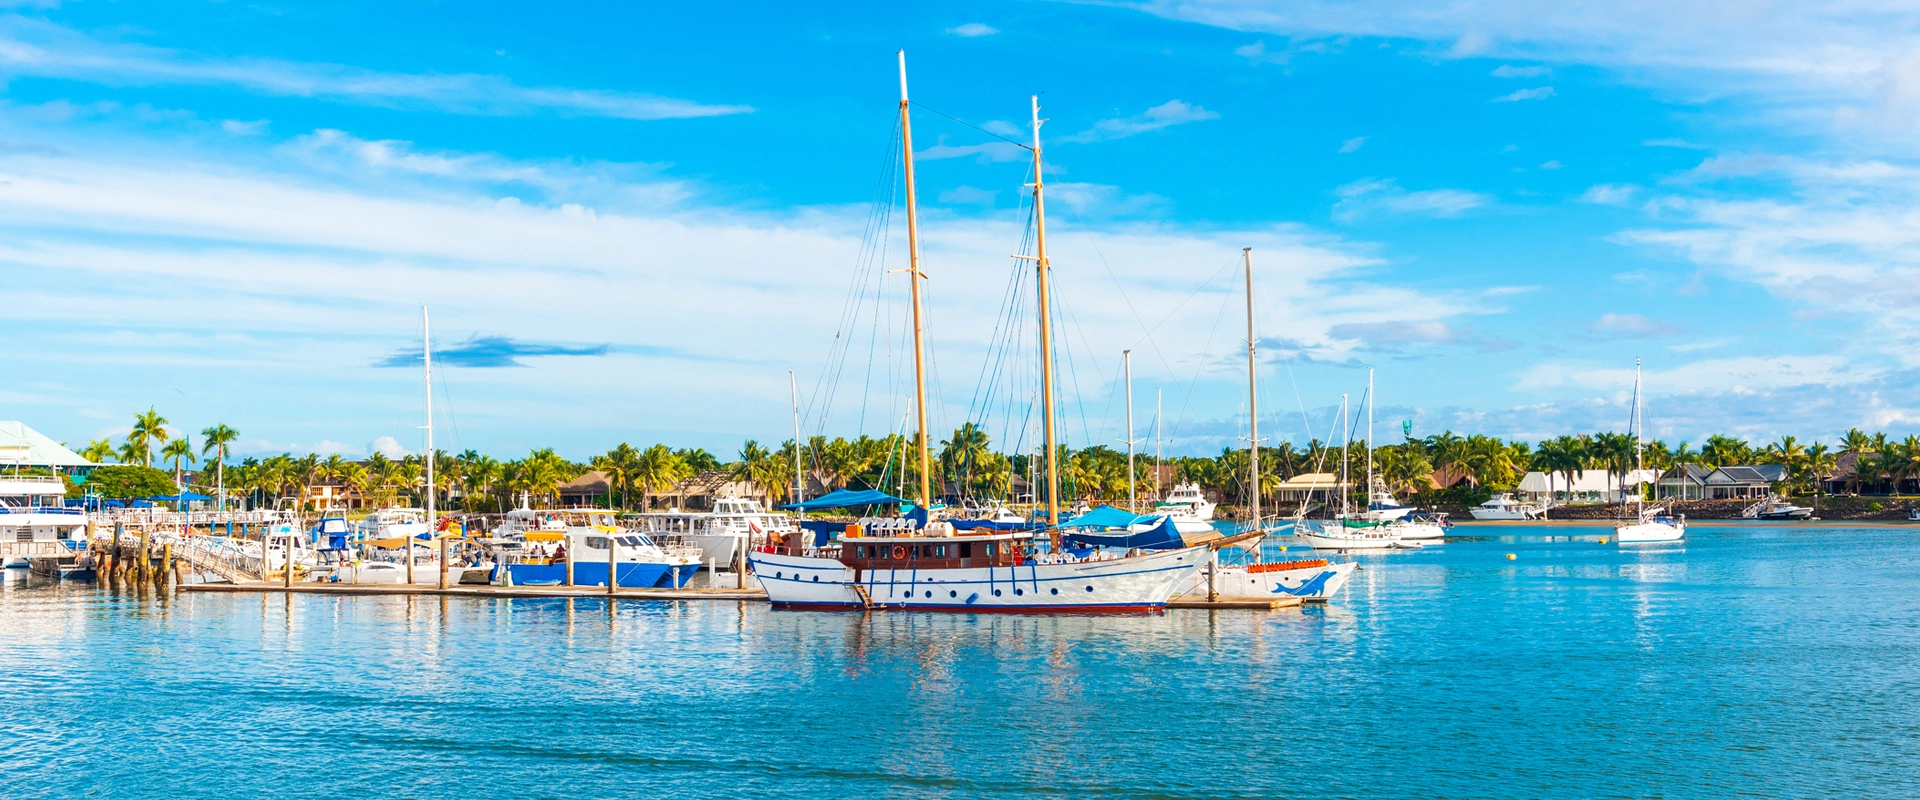 voyage fidji port denarau